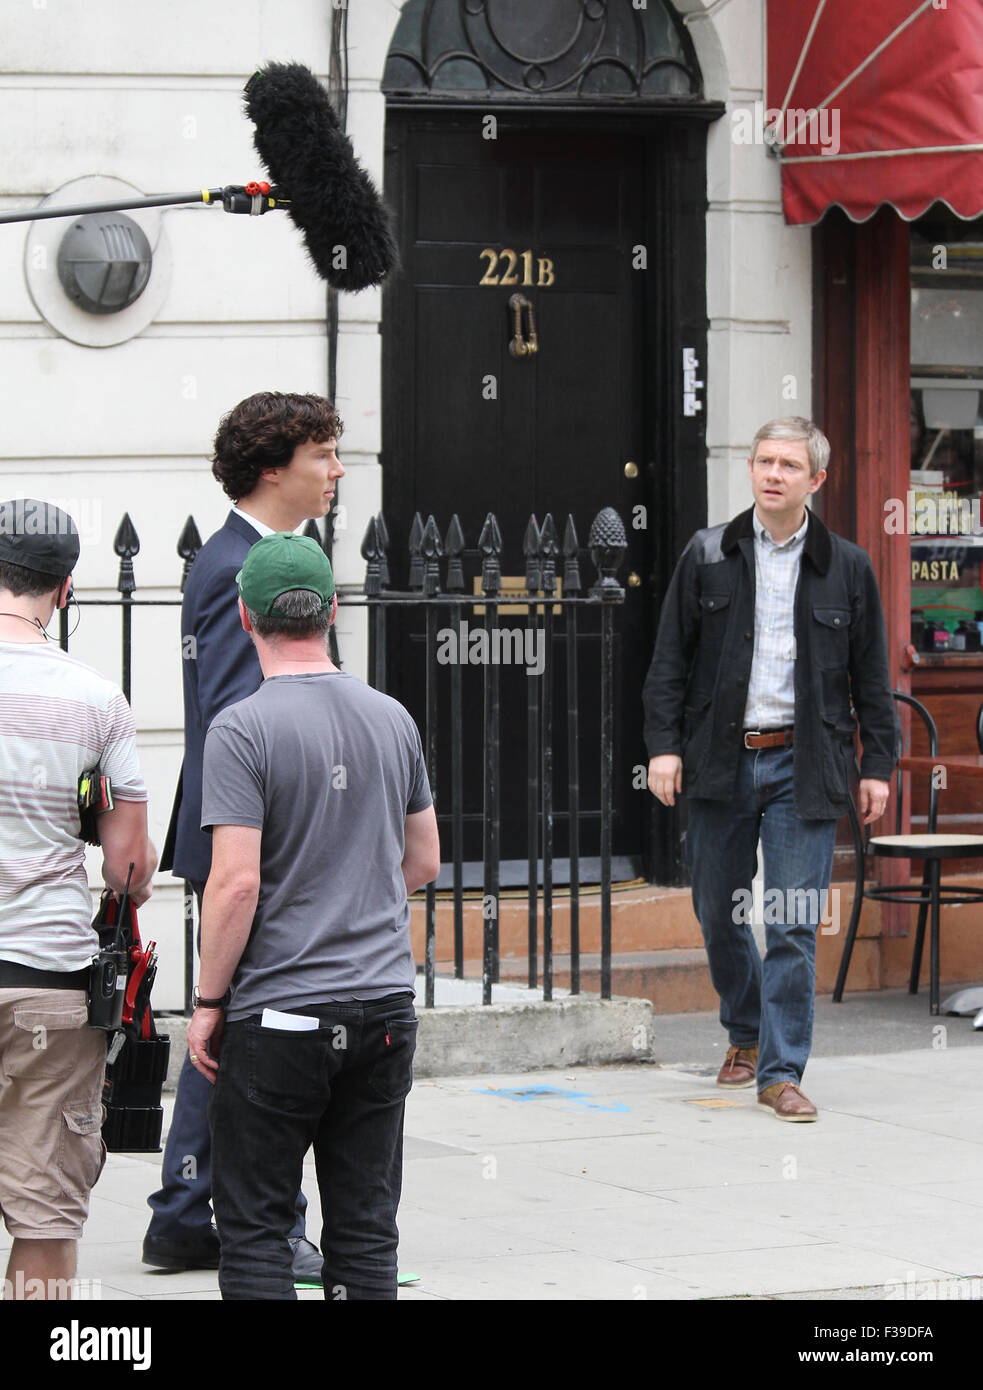 Benedict Cumberbatch and Martin Freeman seen filming scenes for  Sherlock in London Stock Photo